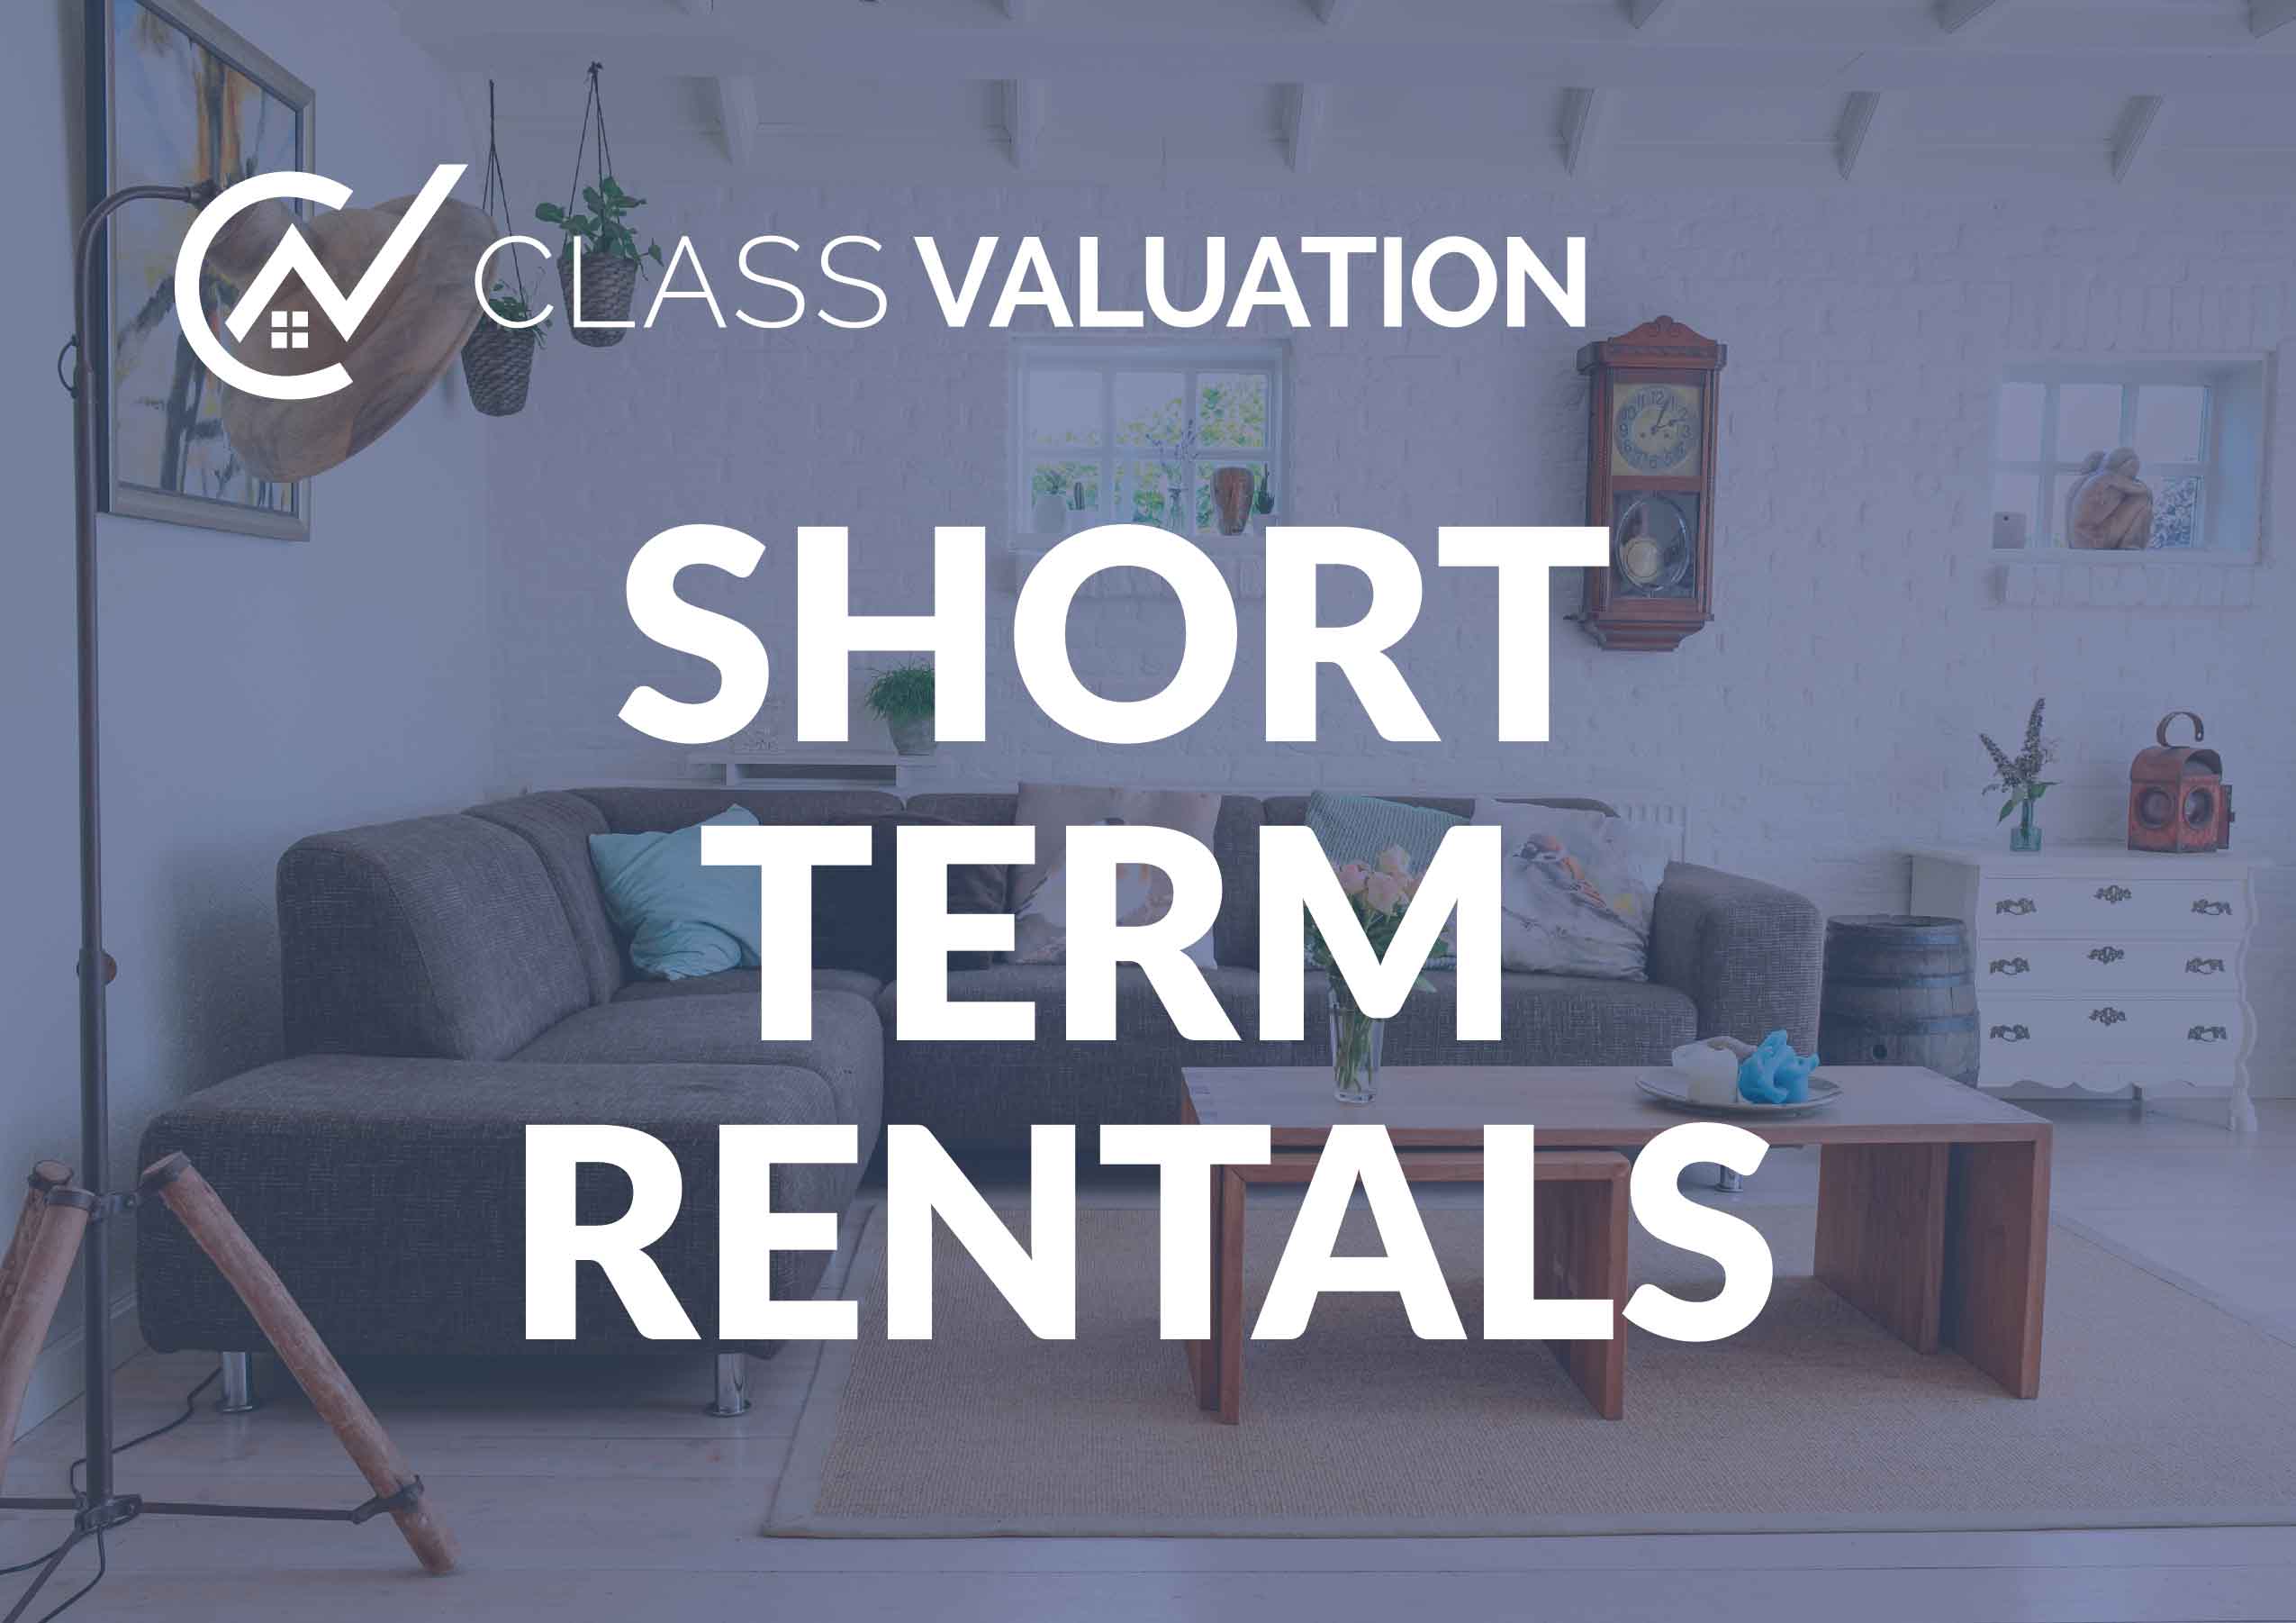 Class Valuation Update on Short Term Rentals